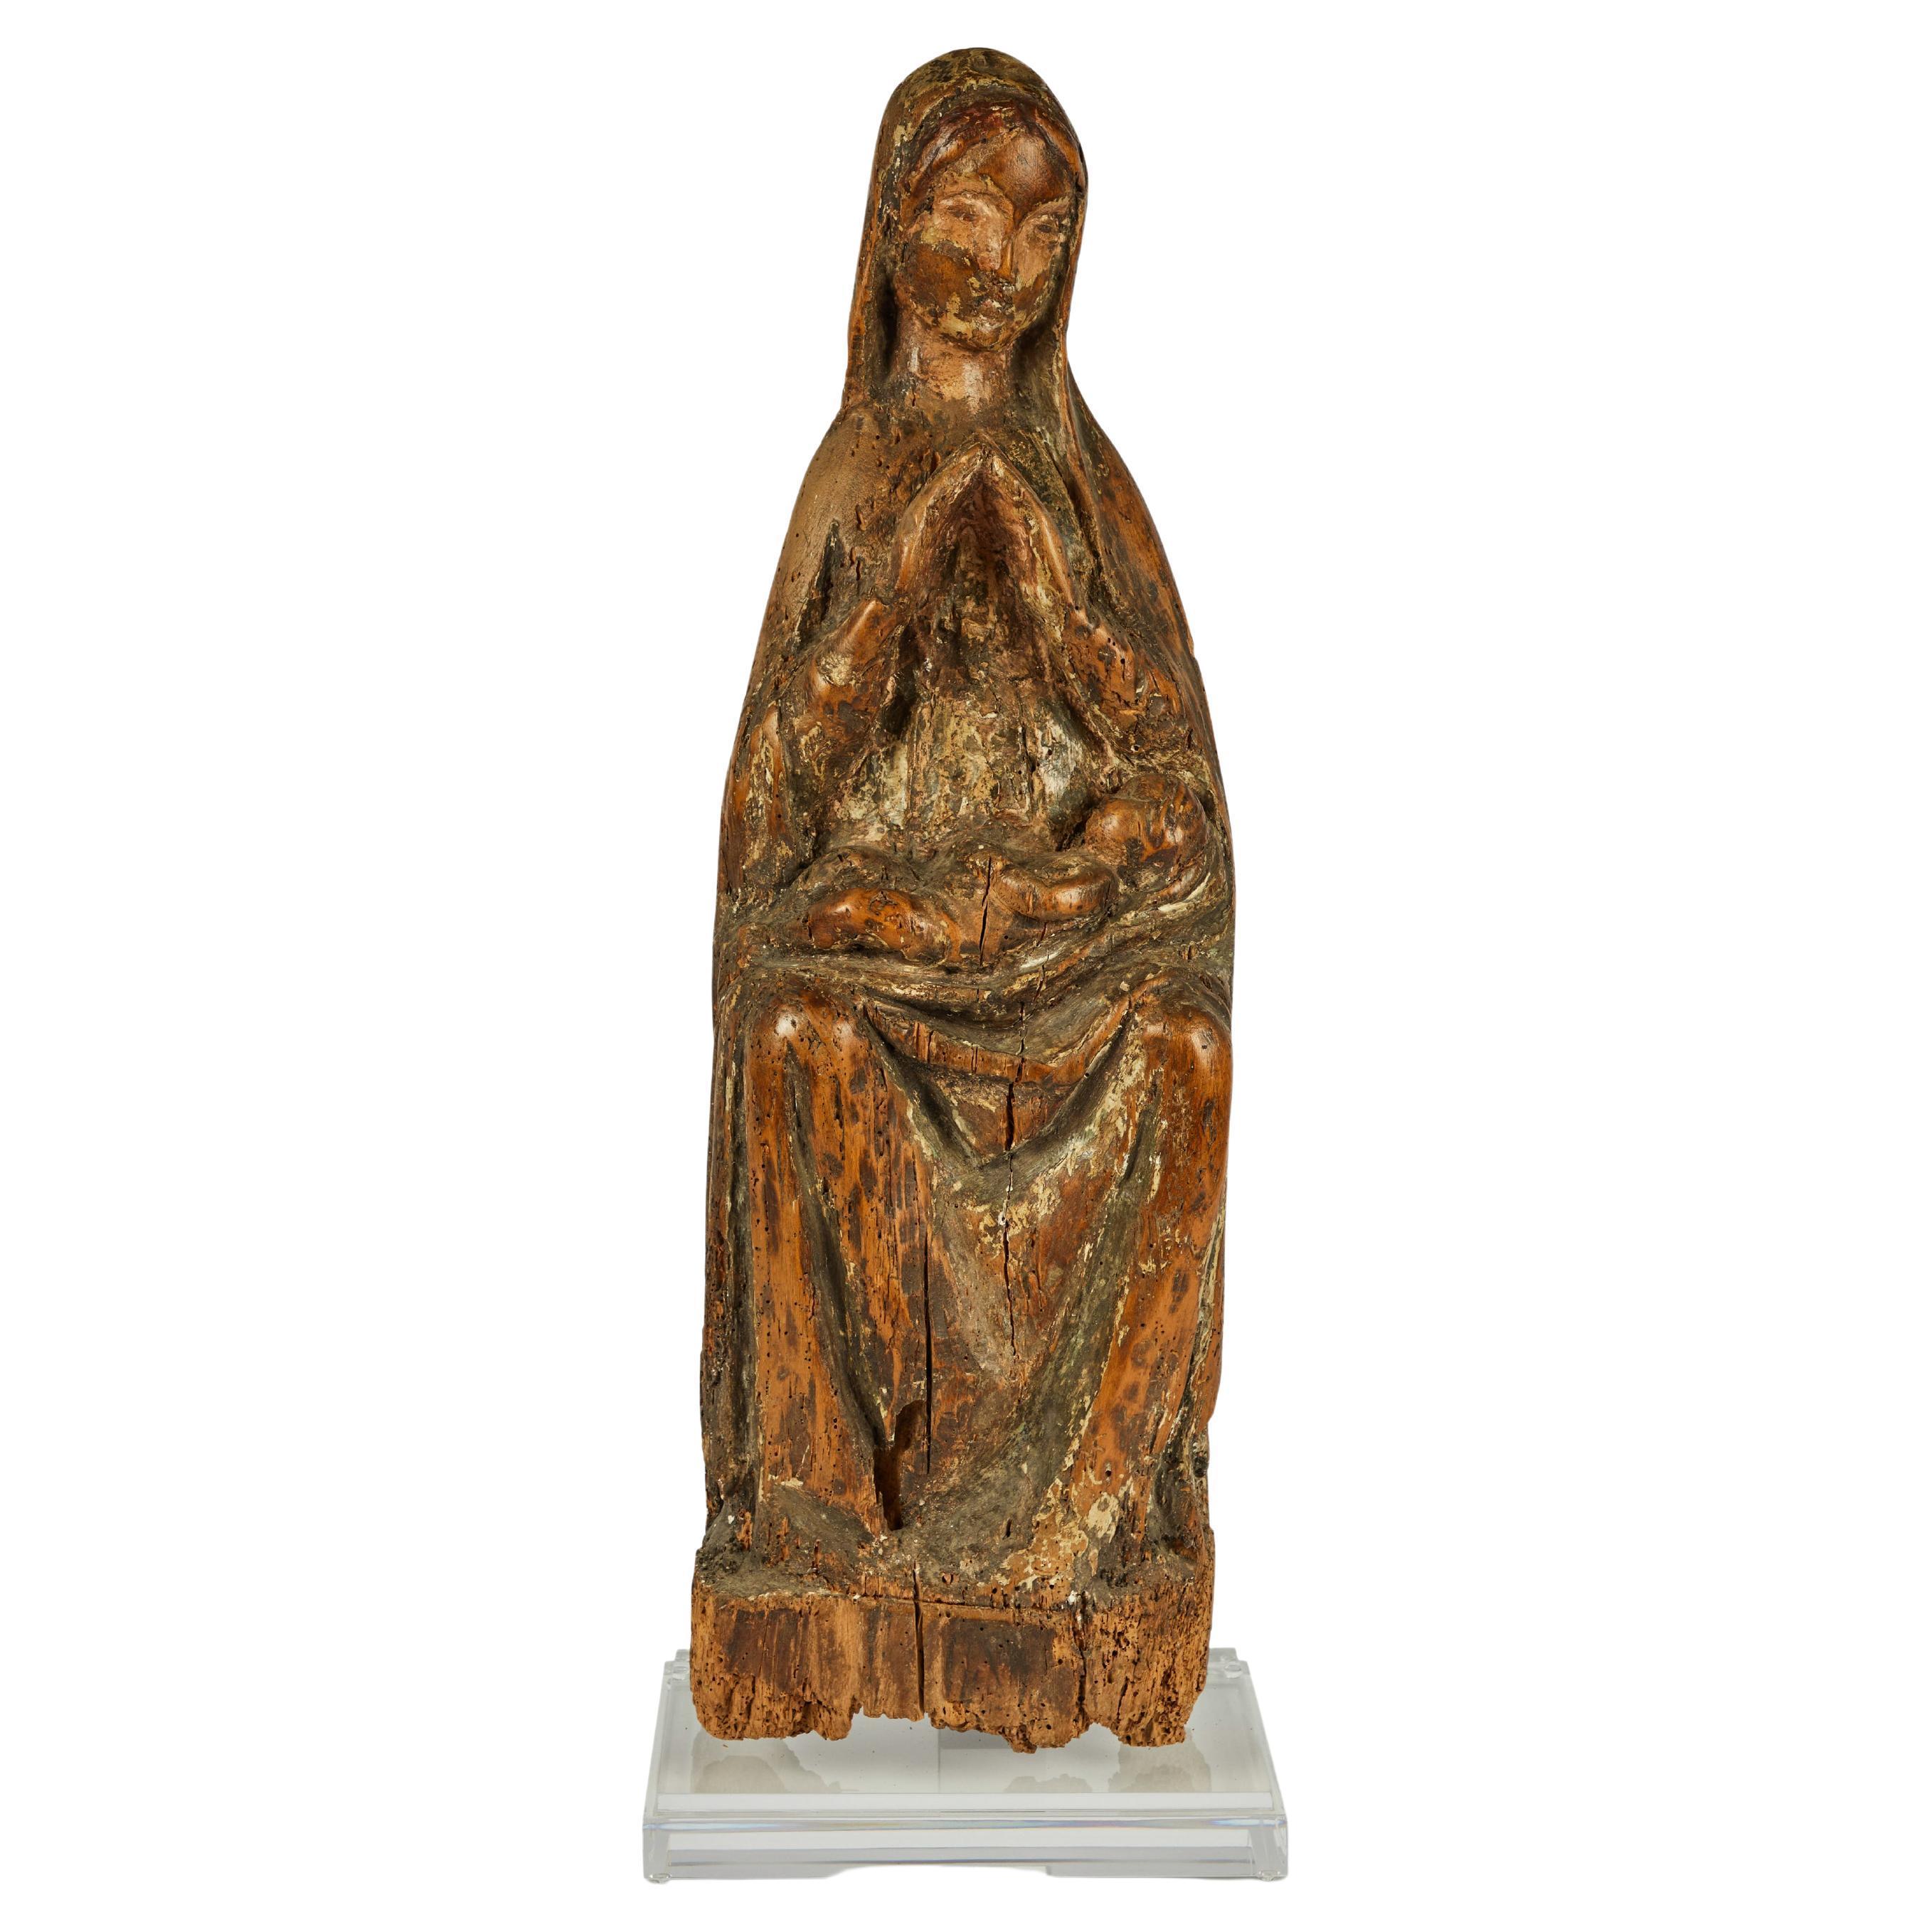 Unknown Figurative Sculpture - Early Renaissance Wood Sculpture